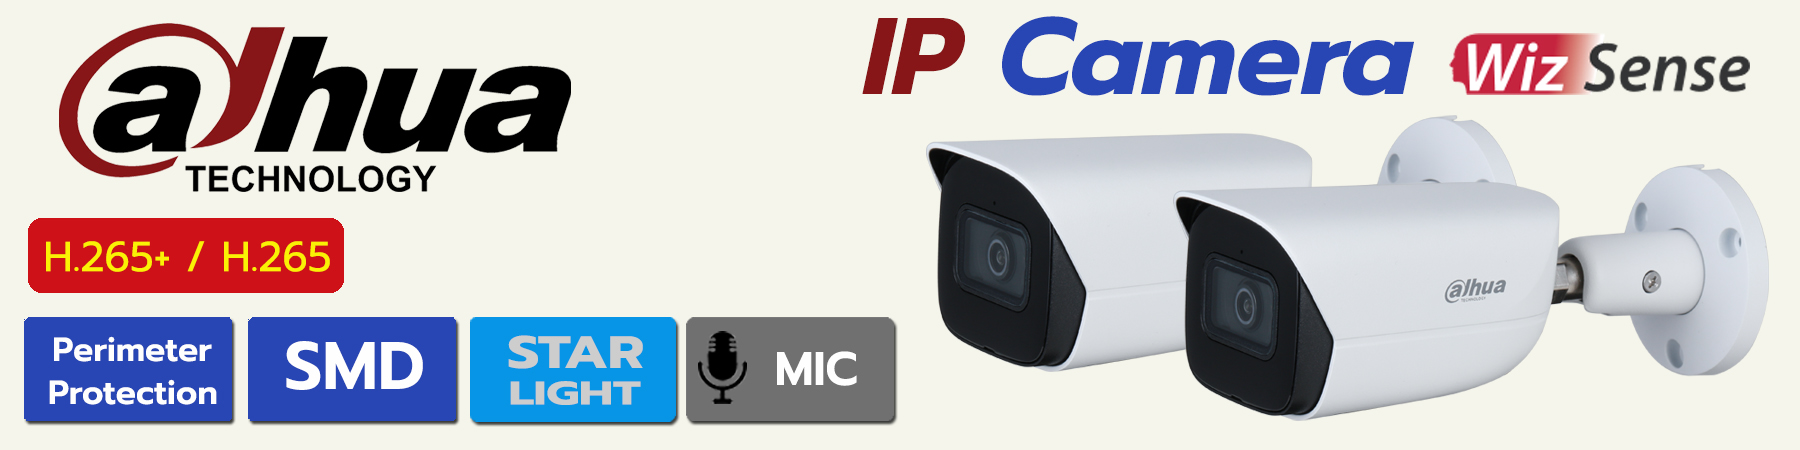 IPC-HFW3241E-SA,IPC-HFW3441E-SA,IPC-HFW3241E-SA ราคา,IPC-HFW3441E-SA ราคา,Dahua WizSense IP Camera,Dahua Wizsense Camera,Perimeter Protection,SMD Plus